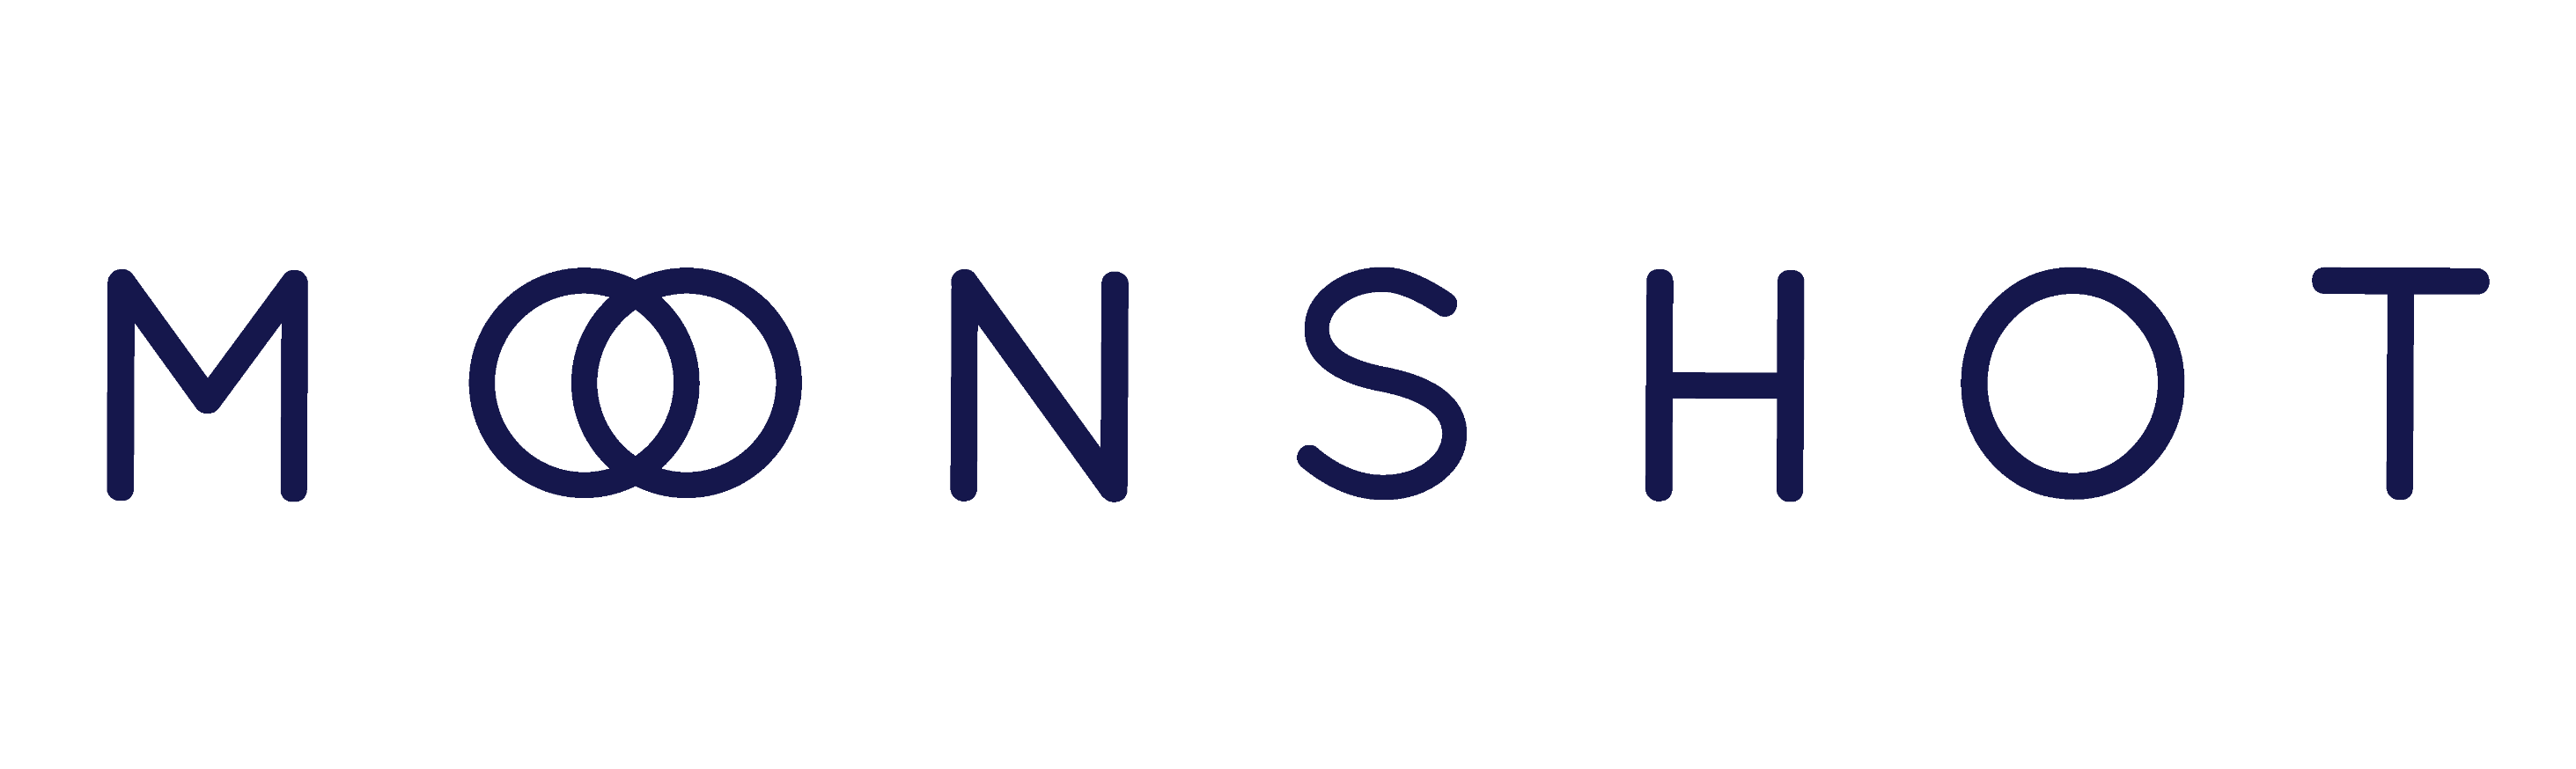 Moonshot logo blue